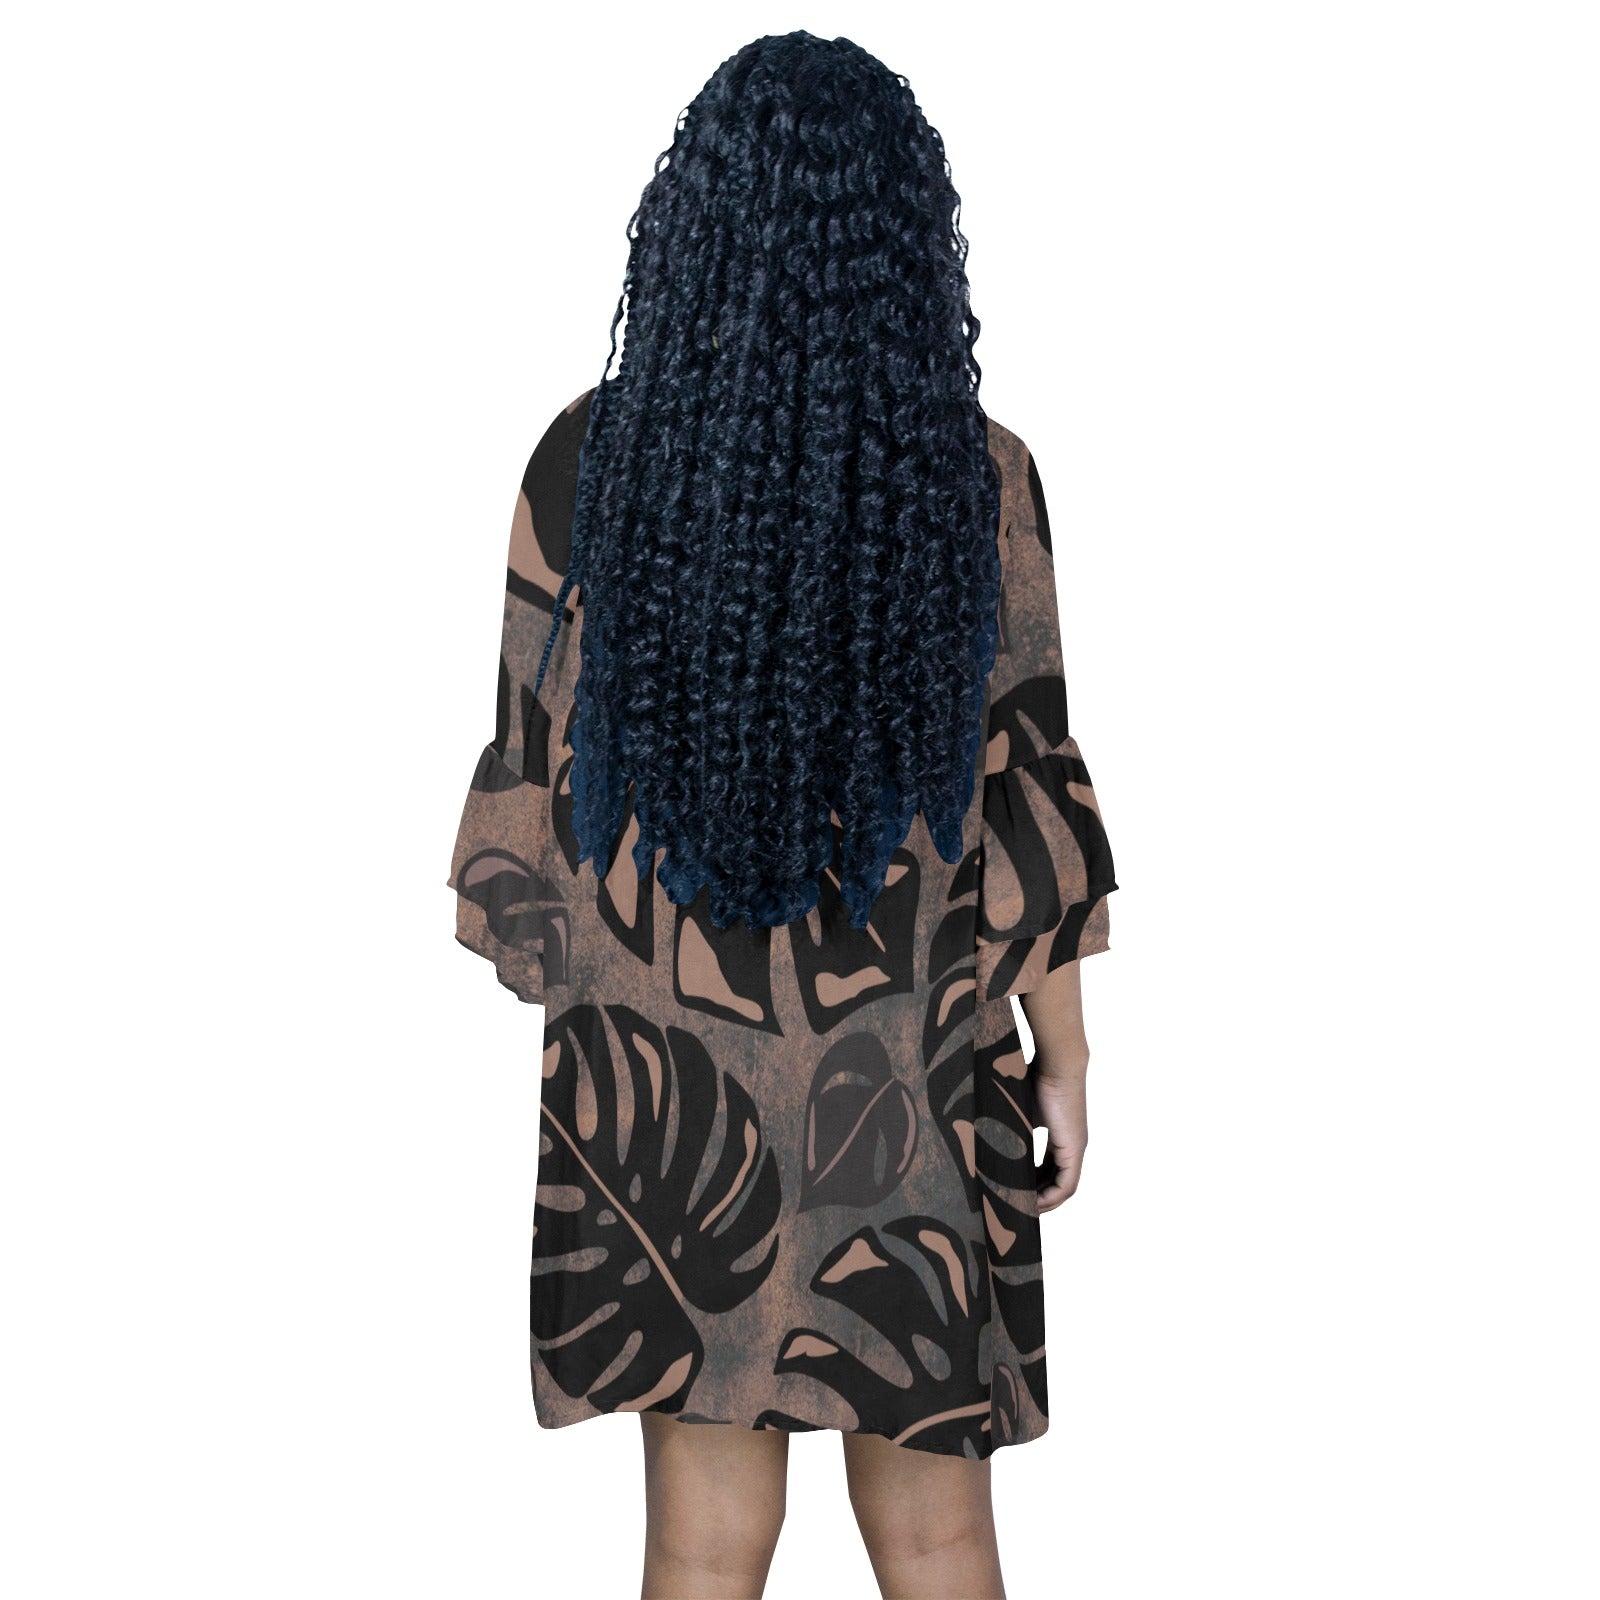 Kalo Taro Neutral Brown and Black Watercolor Half Sleeve Dress Half Sleeves V-Neck Mini Dress